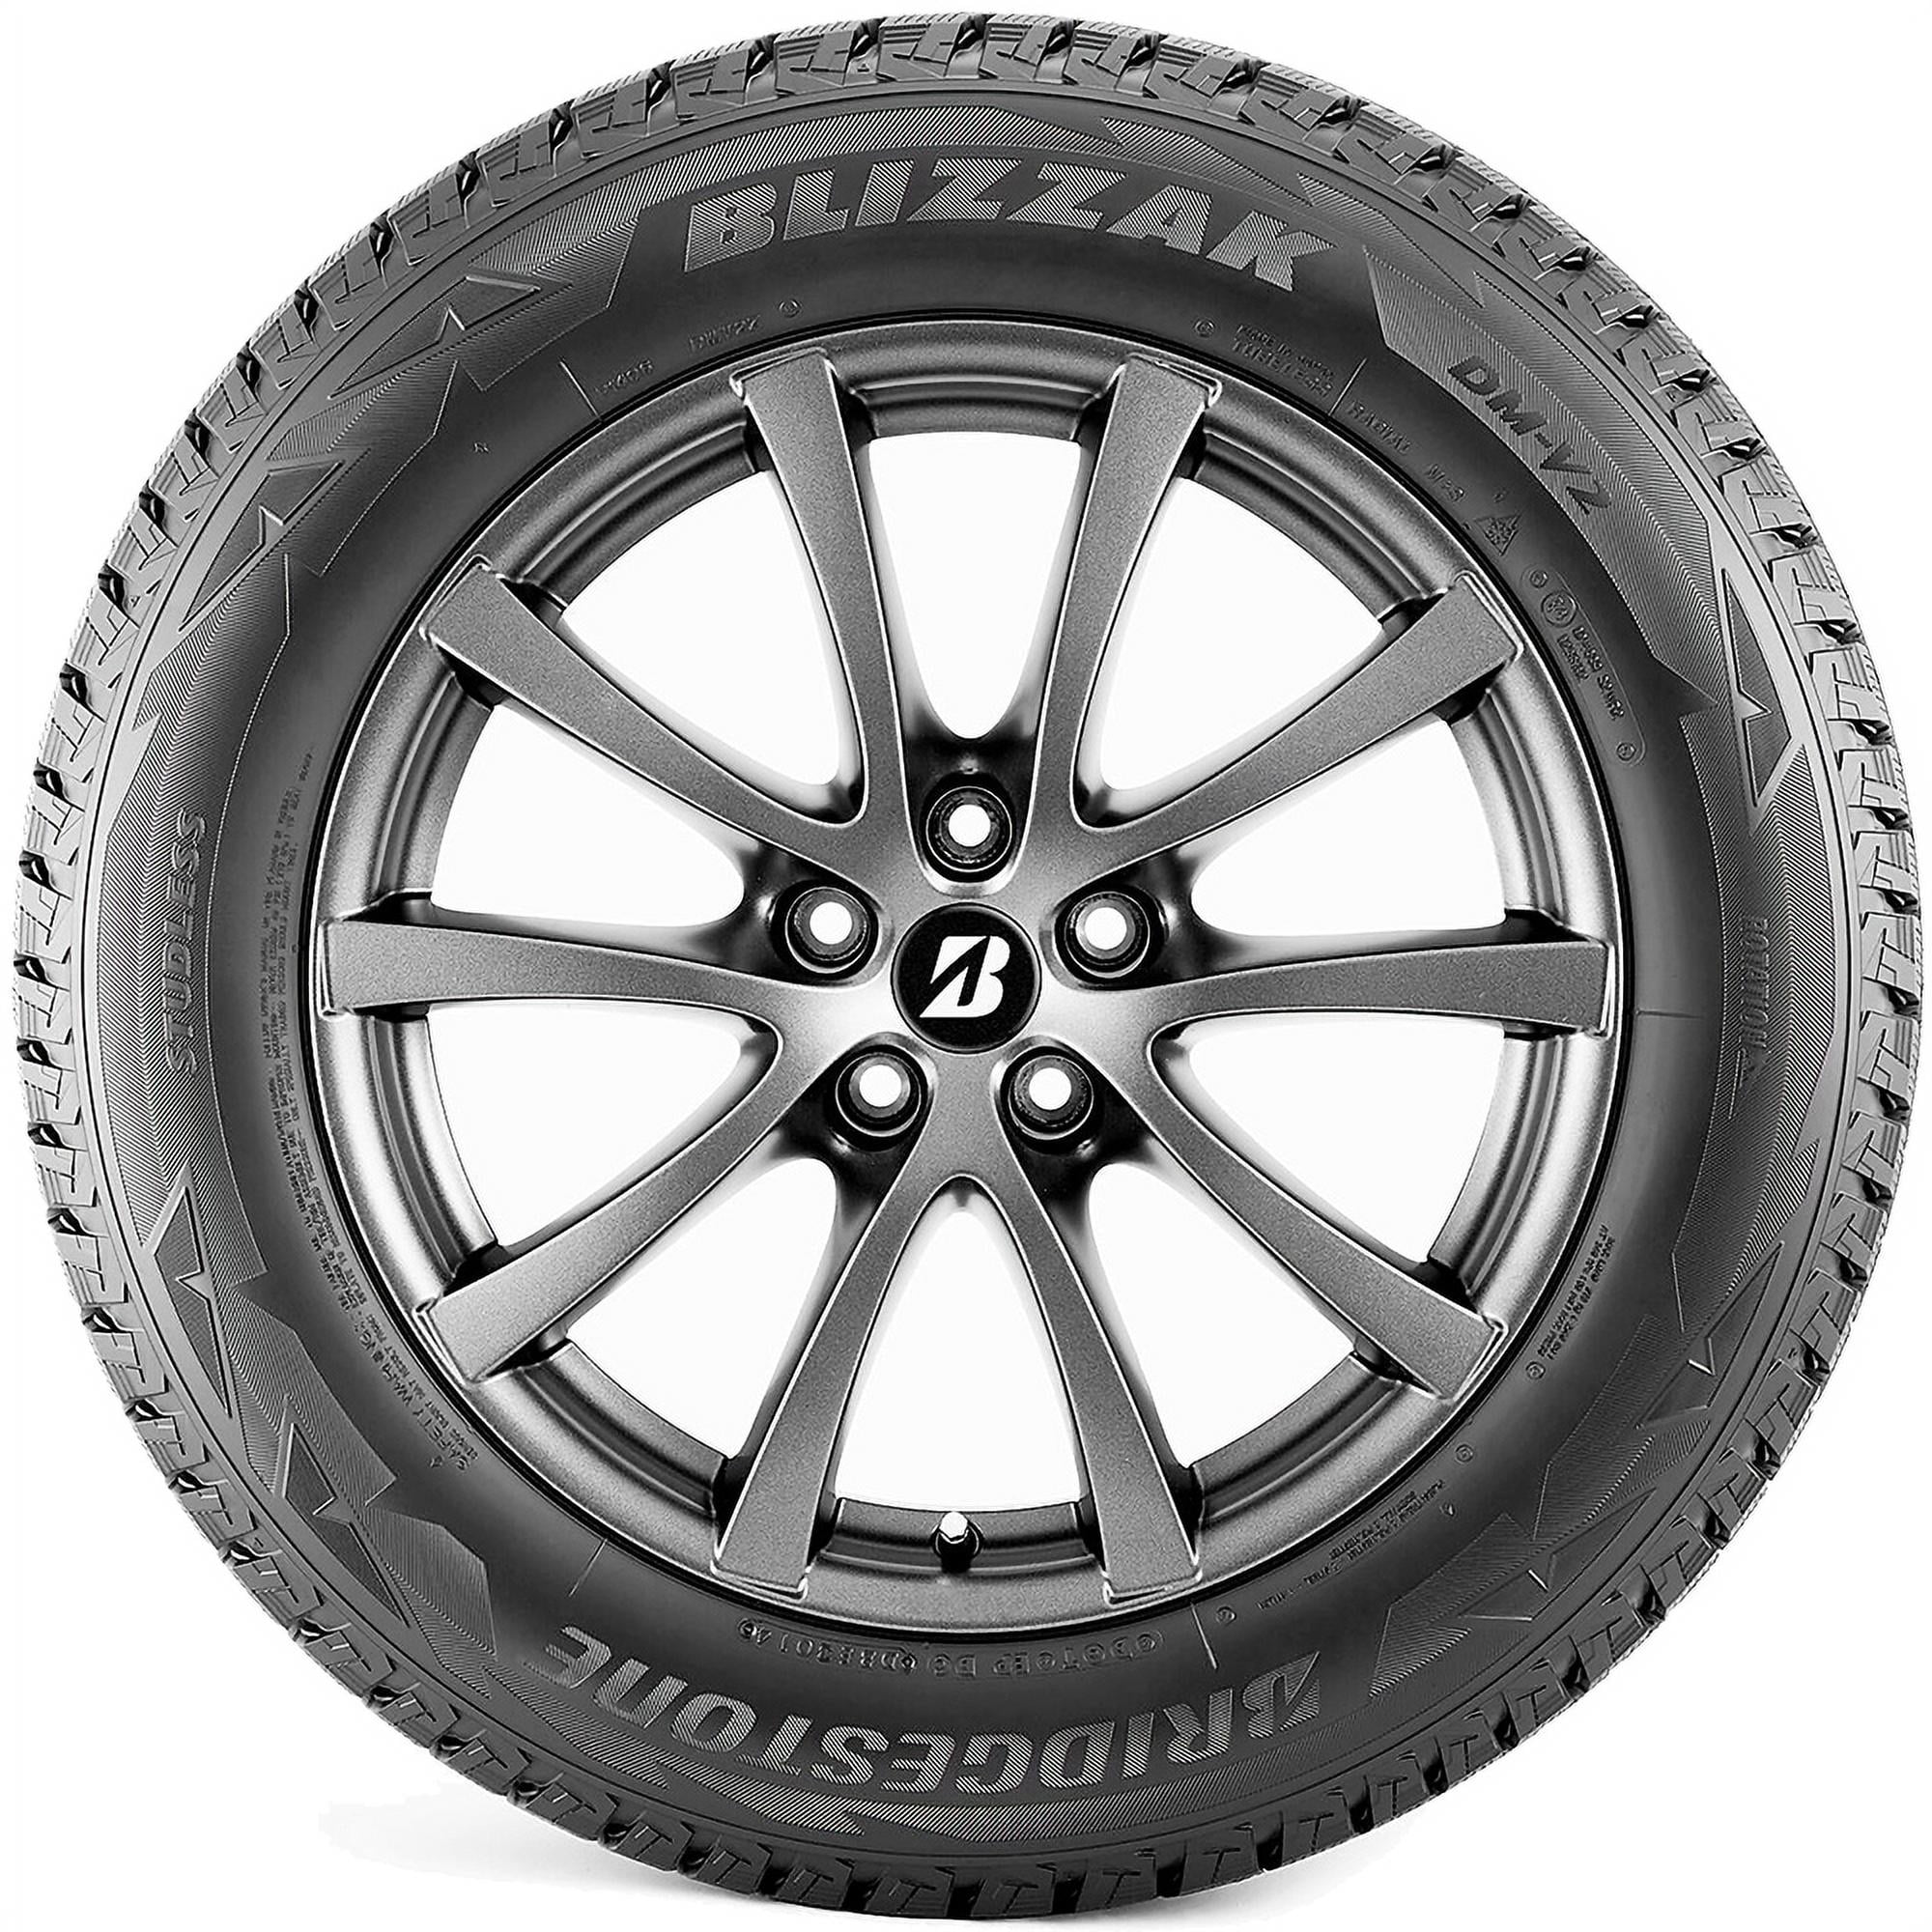 Bridgestone blizzak dm-v2 P255/70R18 112S bsw winter tire